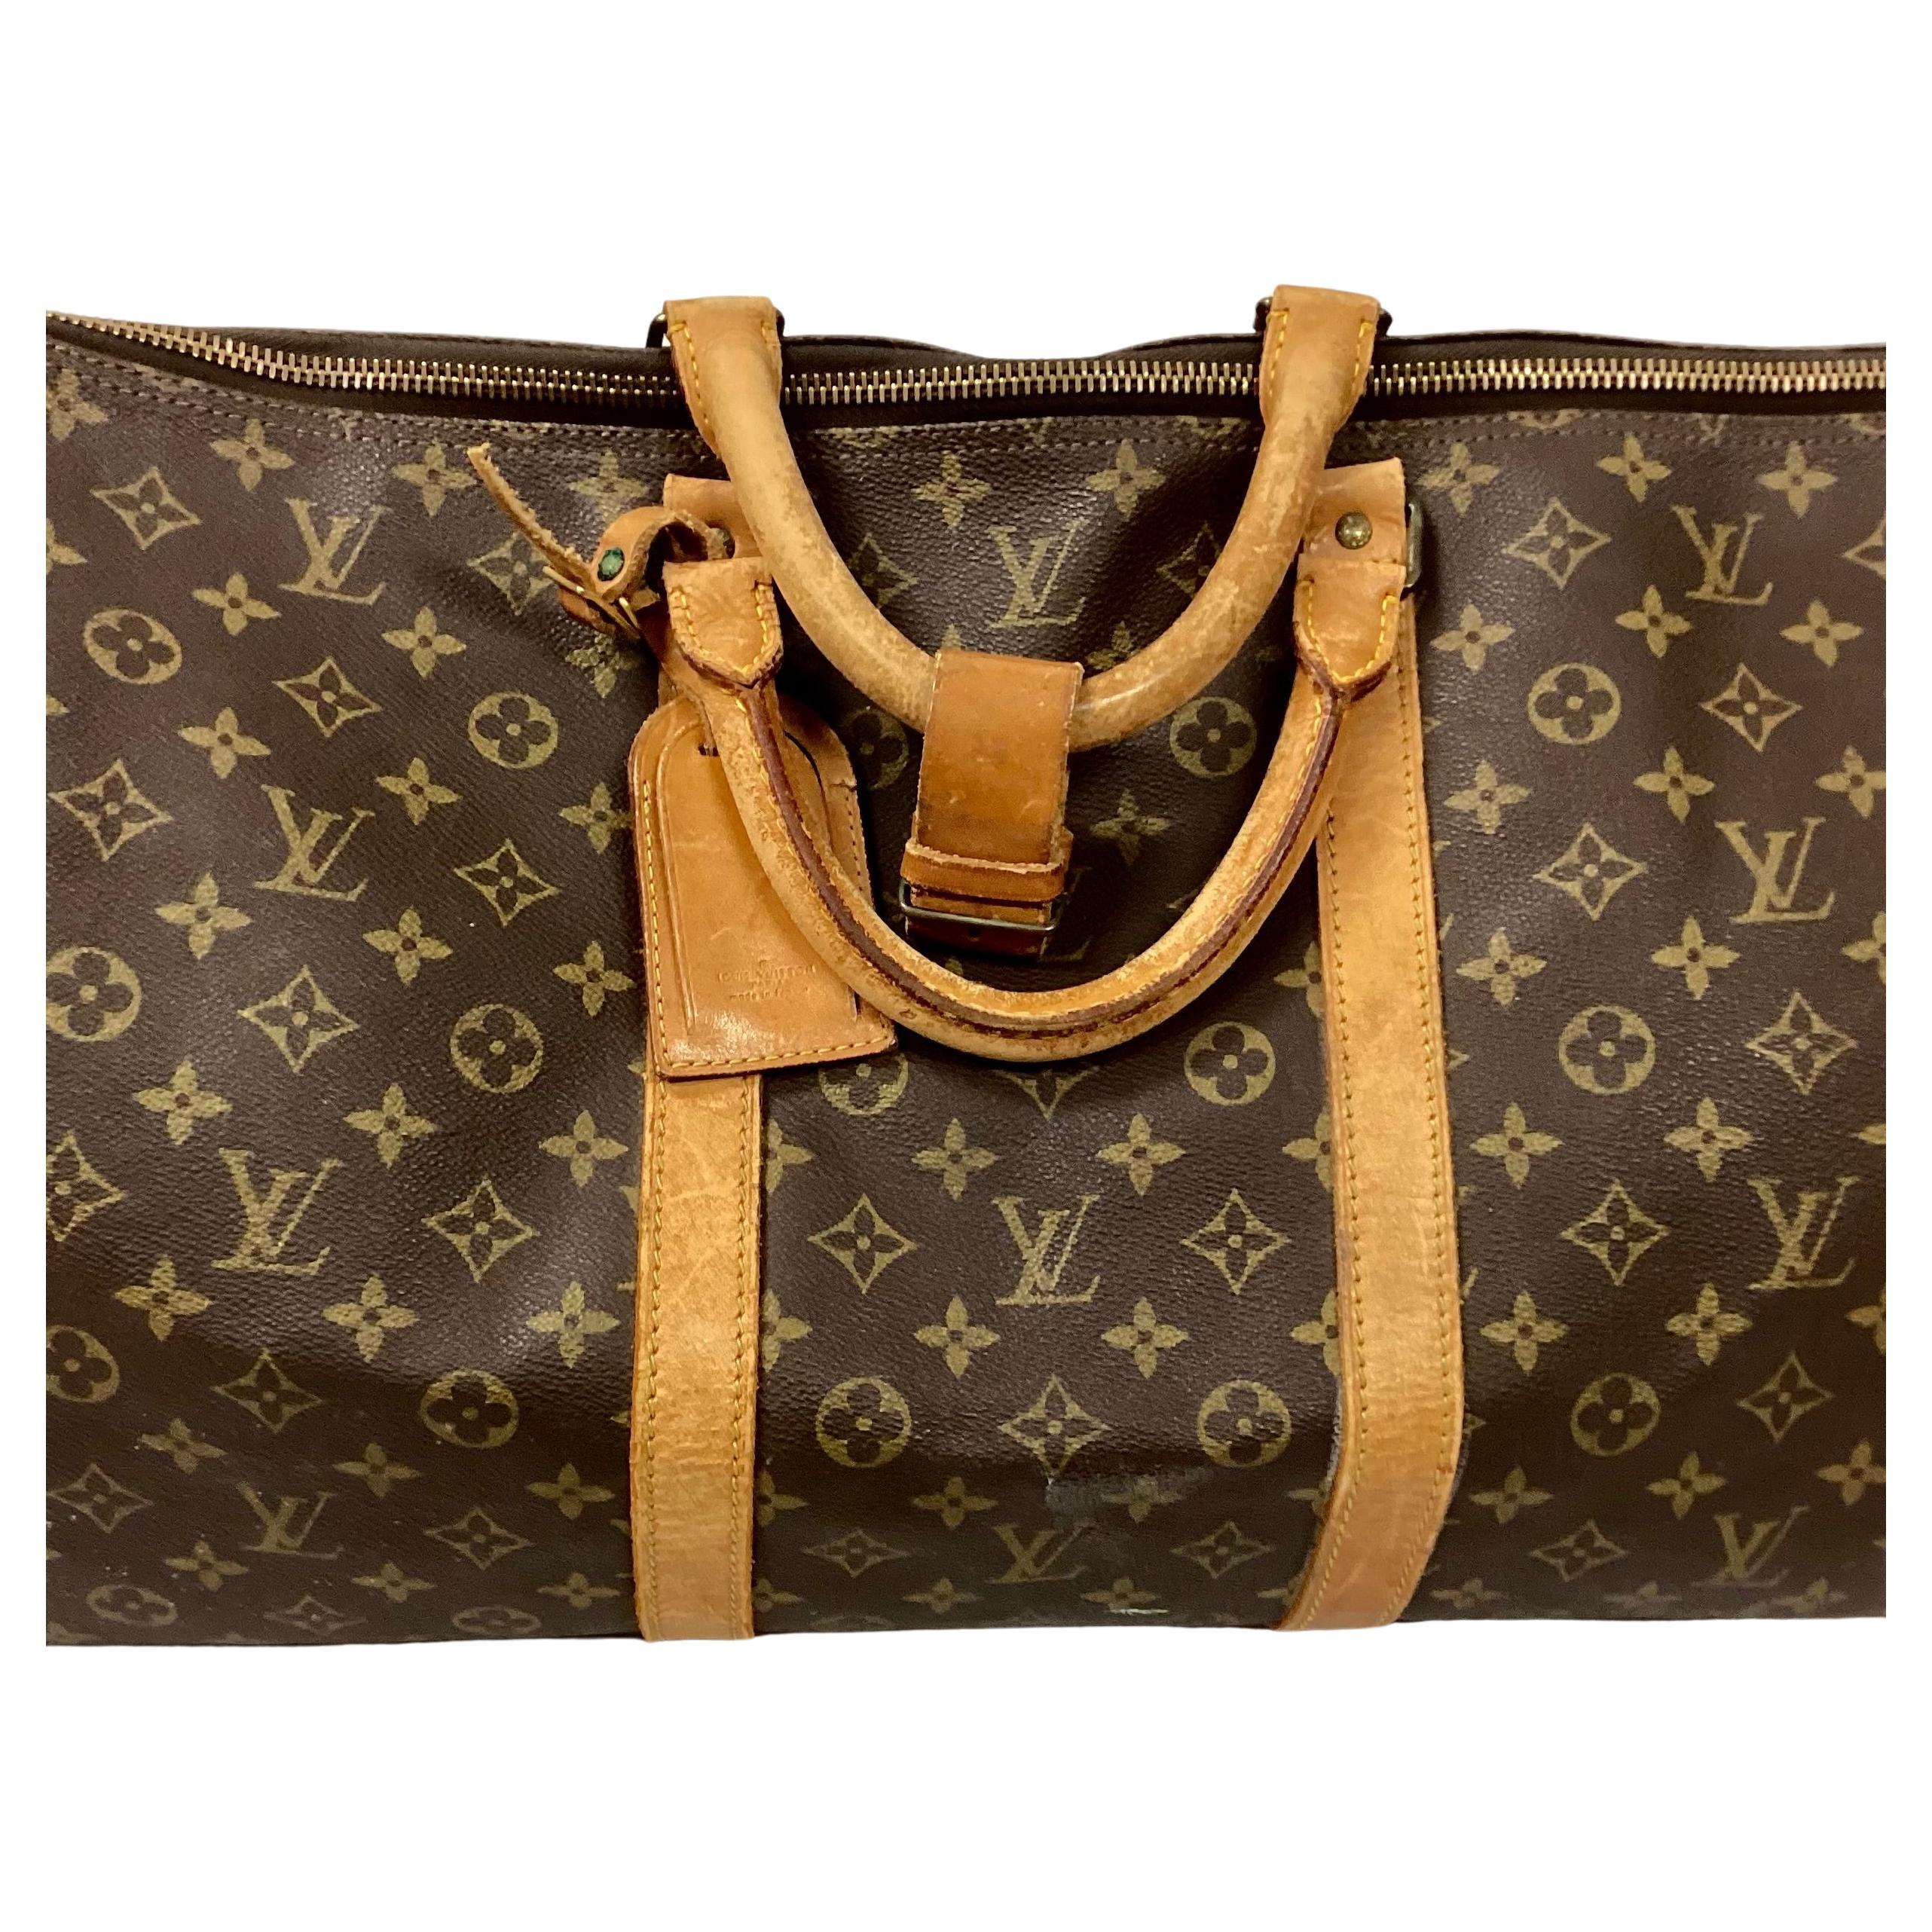 Louie Vuitton Monogram Keepall Travel  Bag In Good Condition For Sale In Bradenton, FL